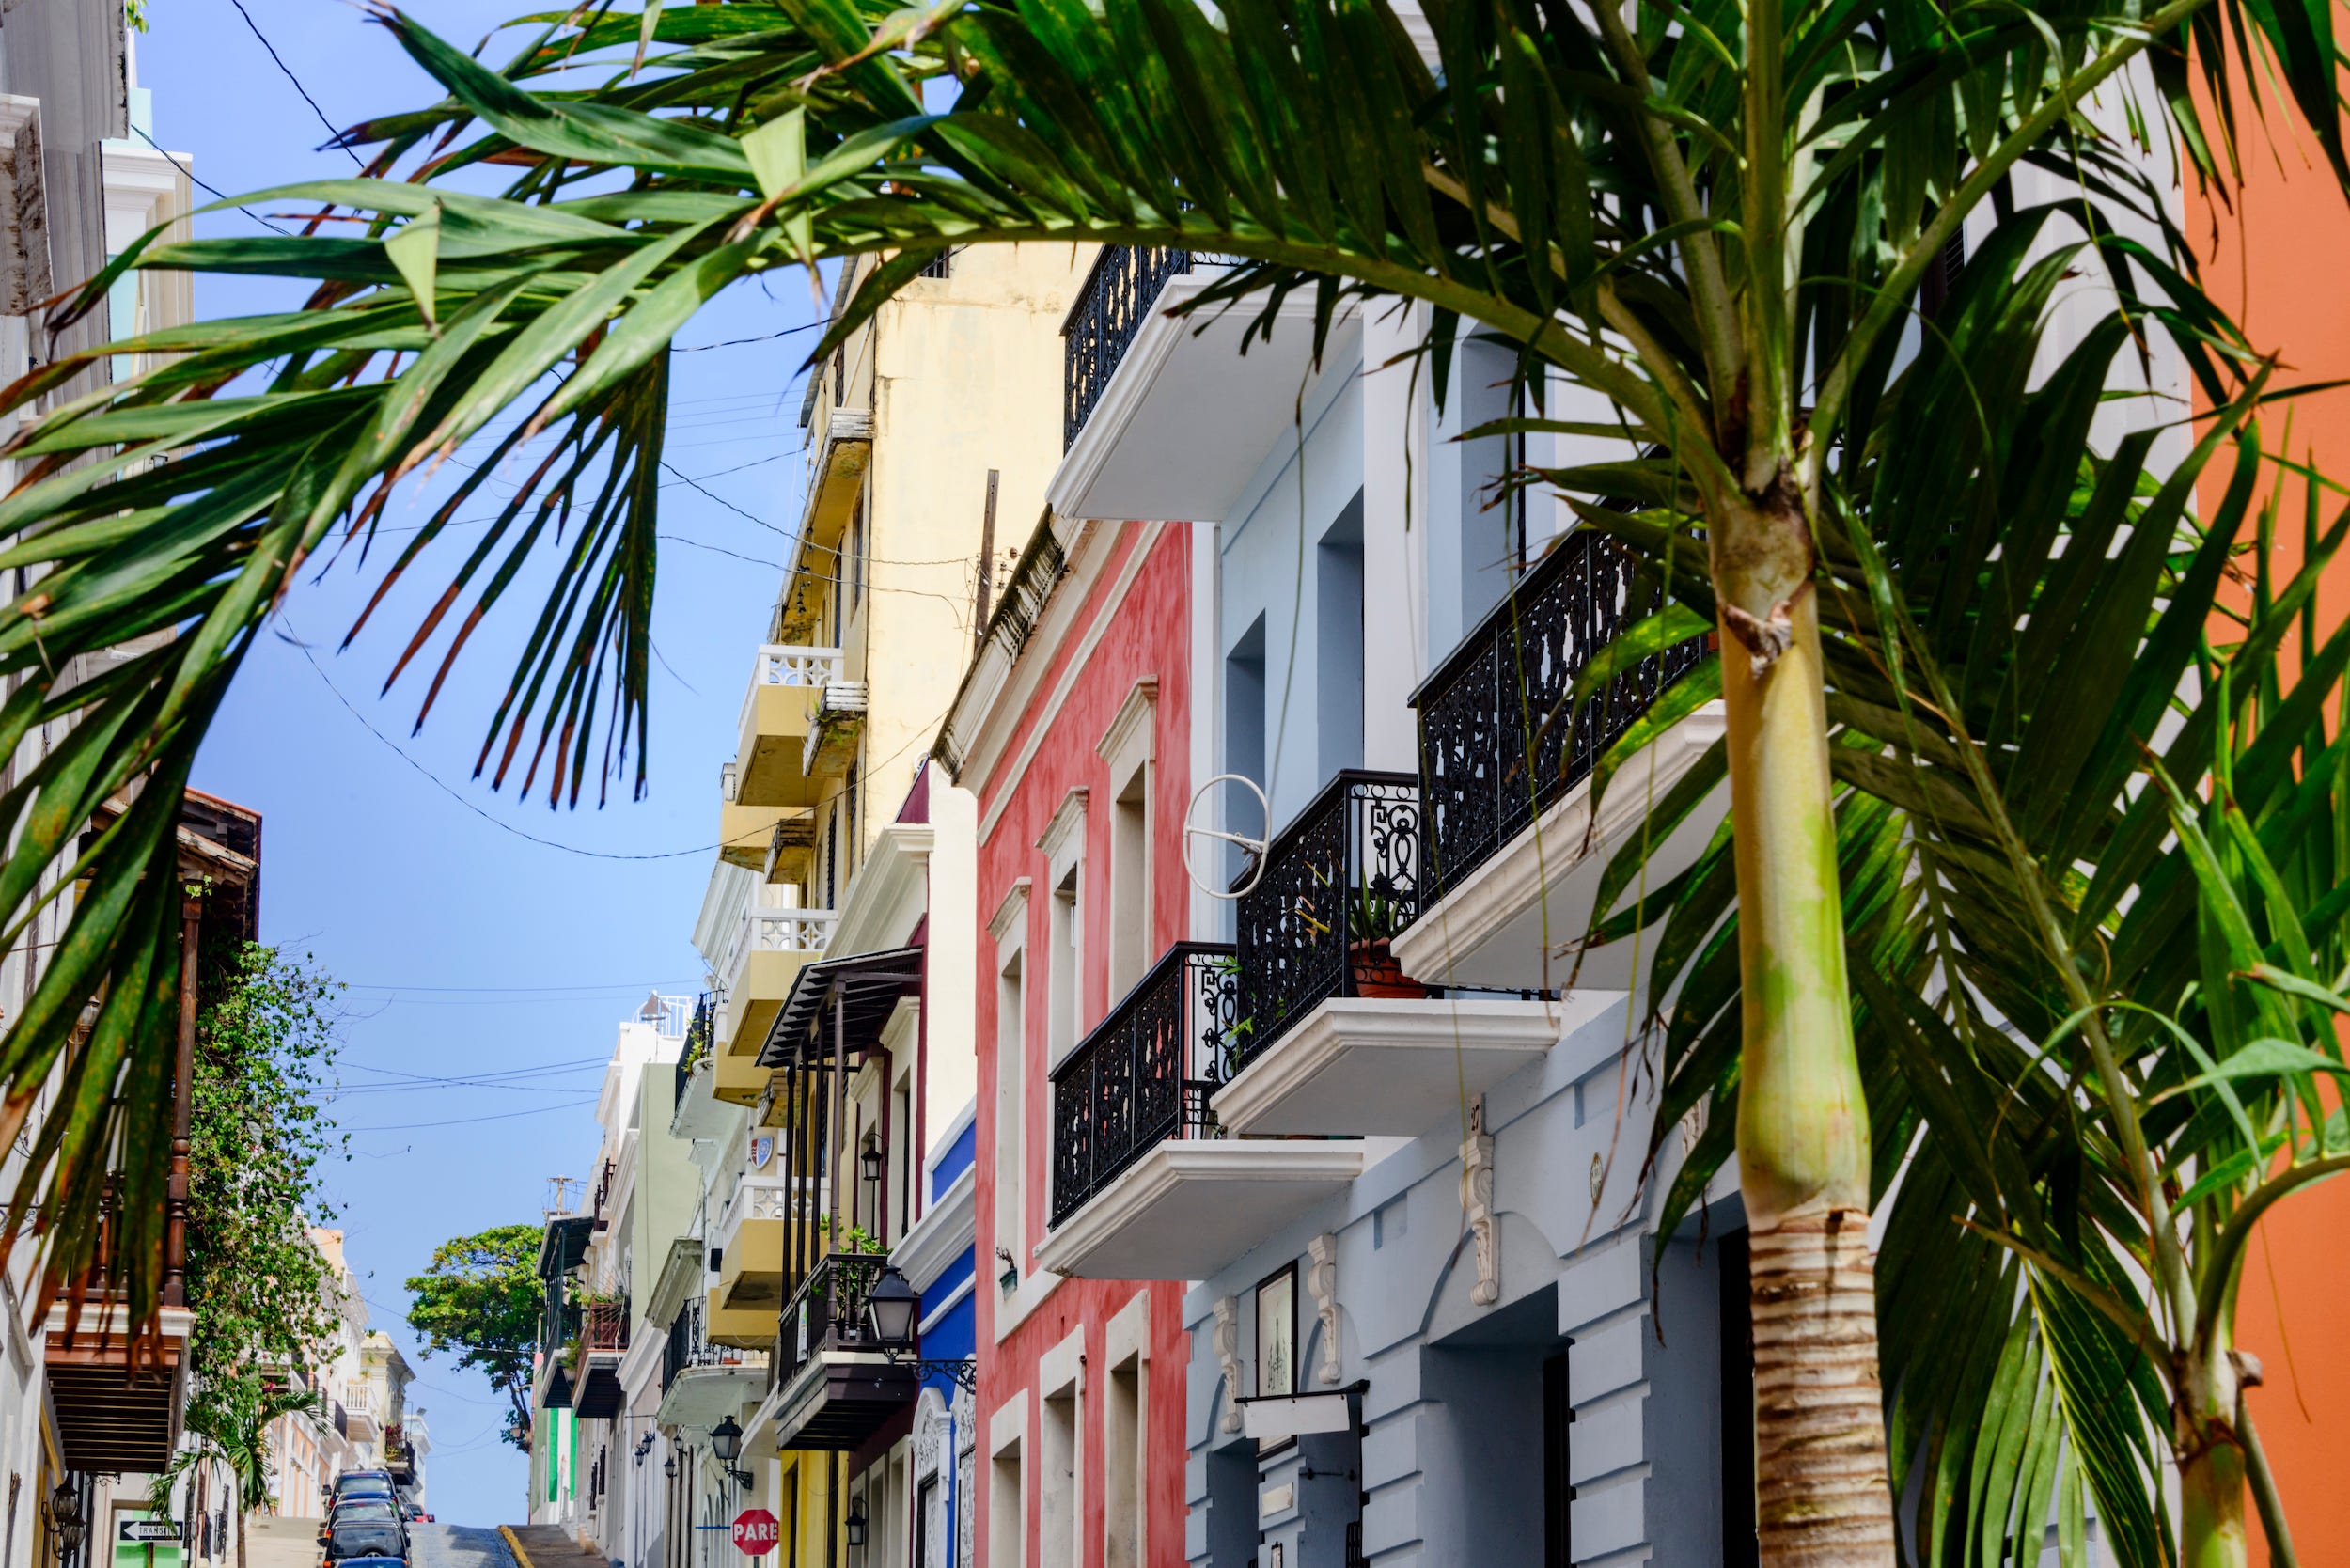 Häuser in der Altstadt von San Juan, Puerto Rico.